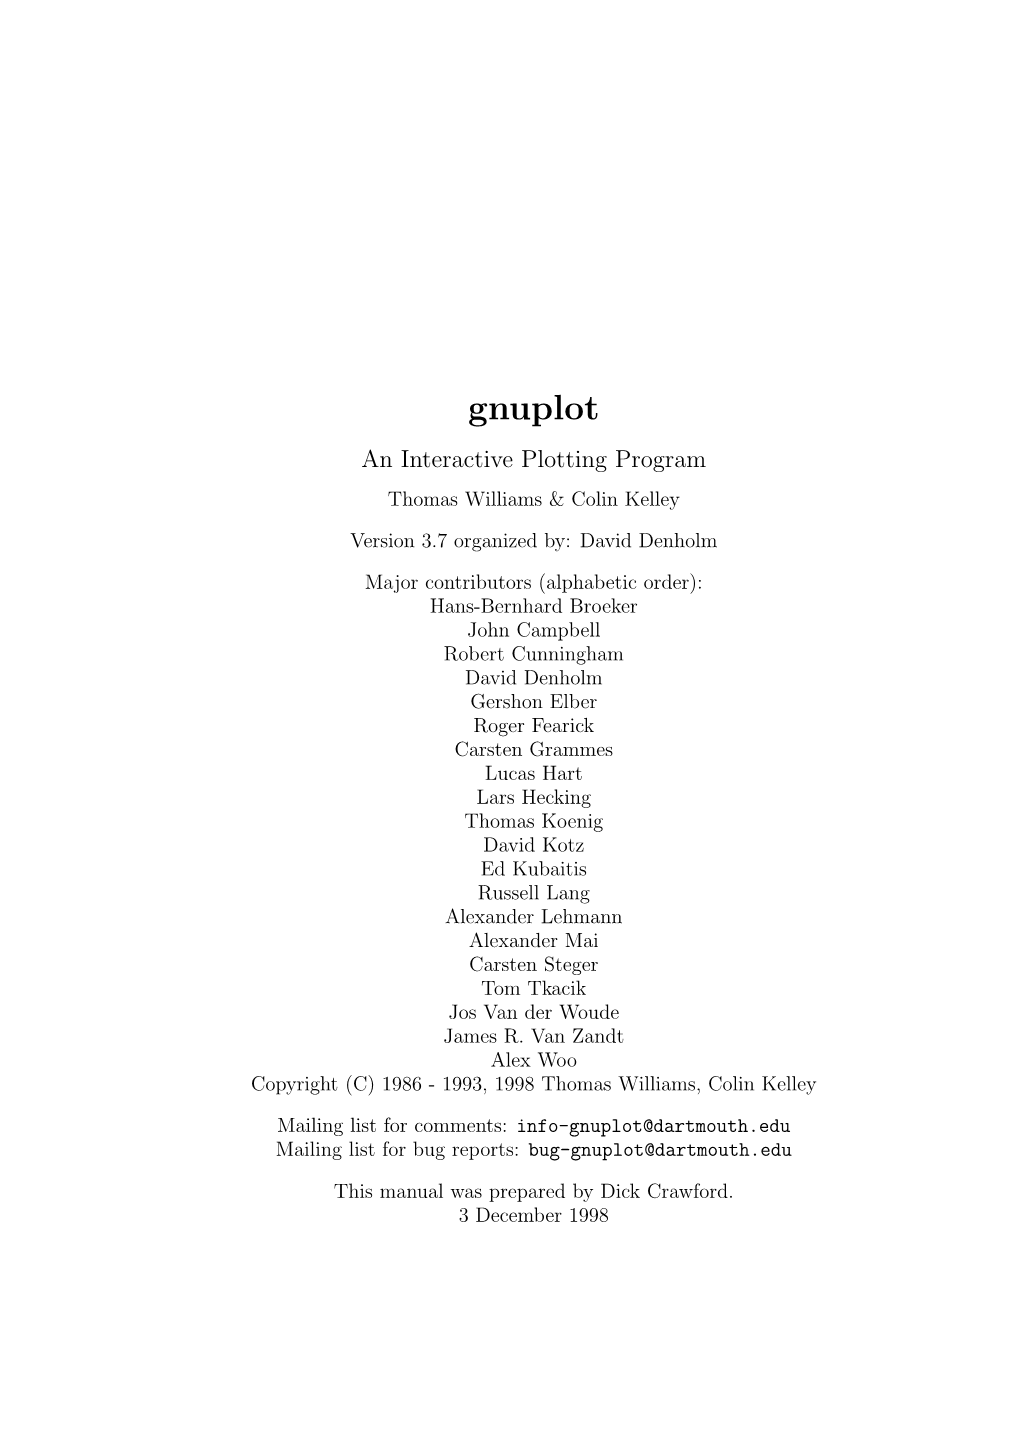 Gnuplot an Interactive Plotting Program Thomas Williams & Colin Kelley